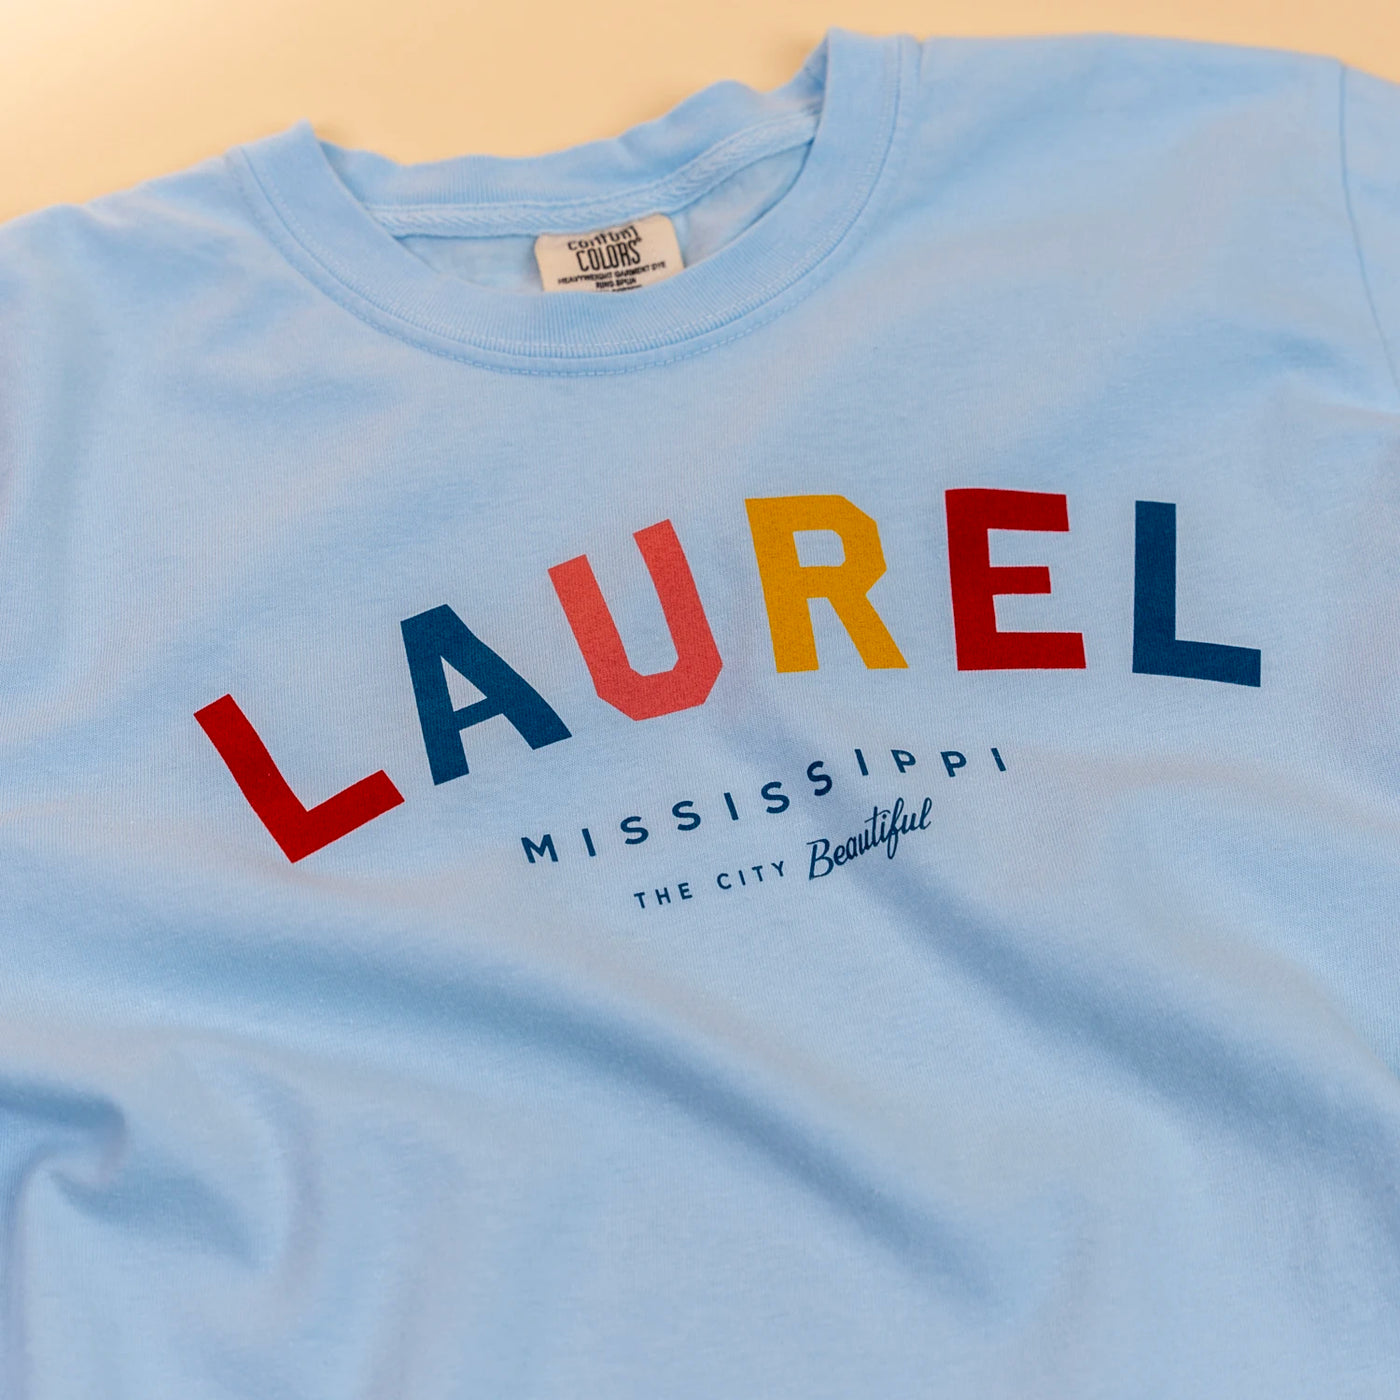 Laurel Colors Long Sleeve Tee shirt